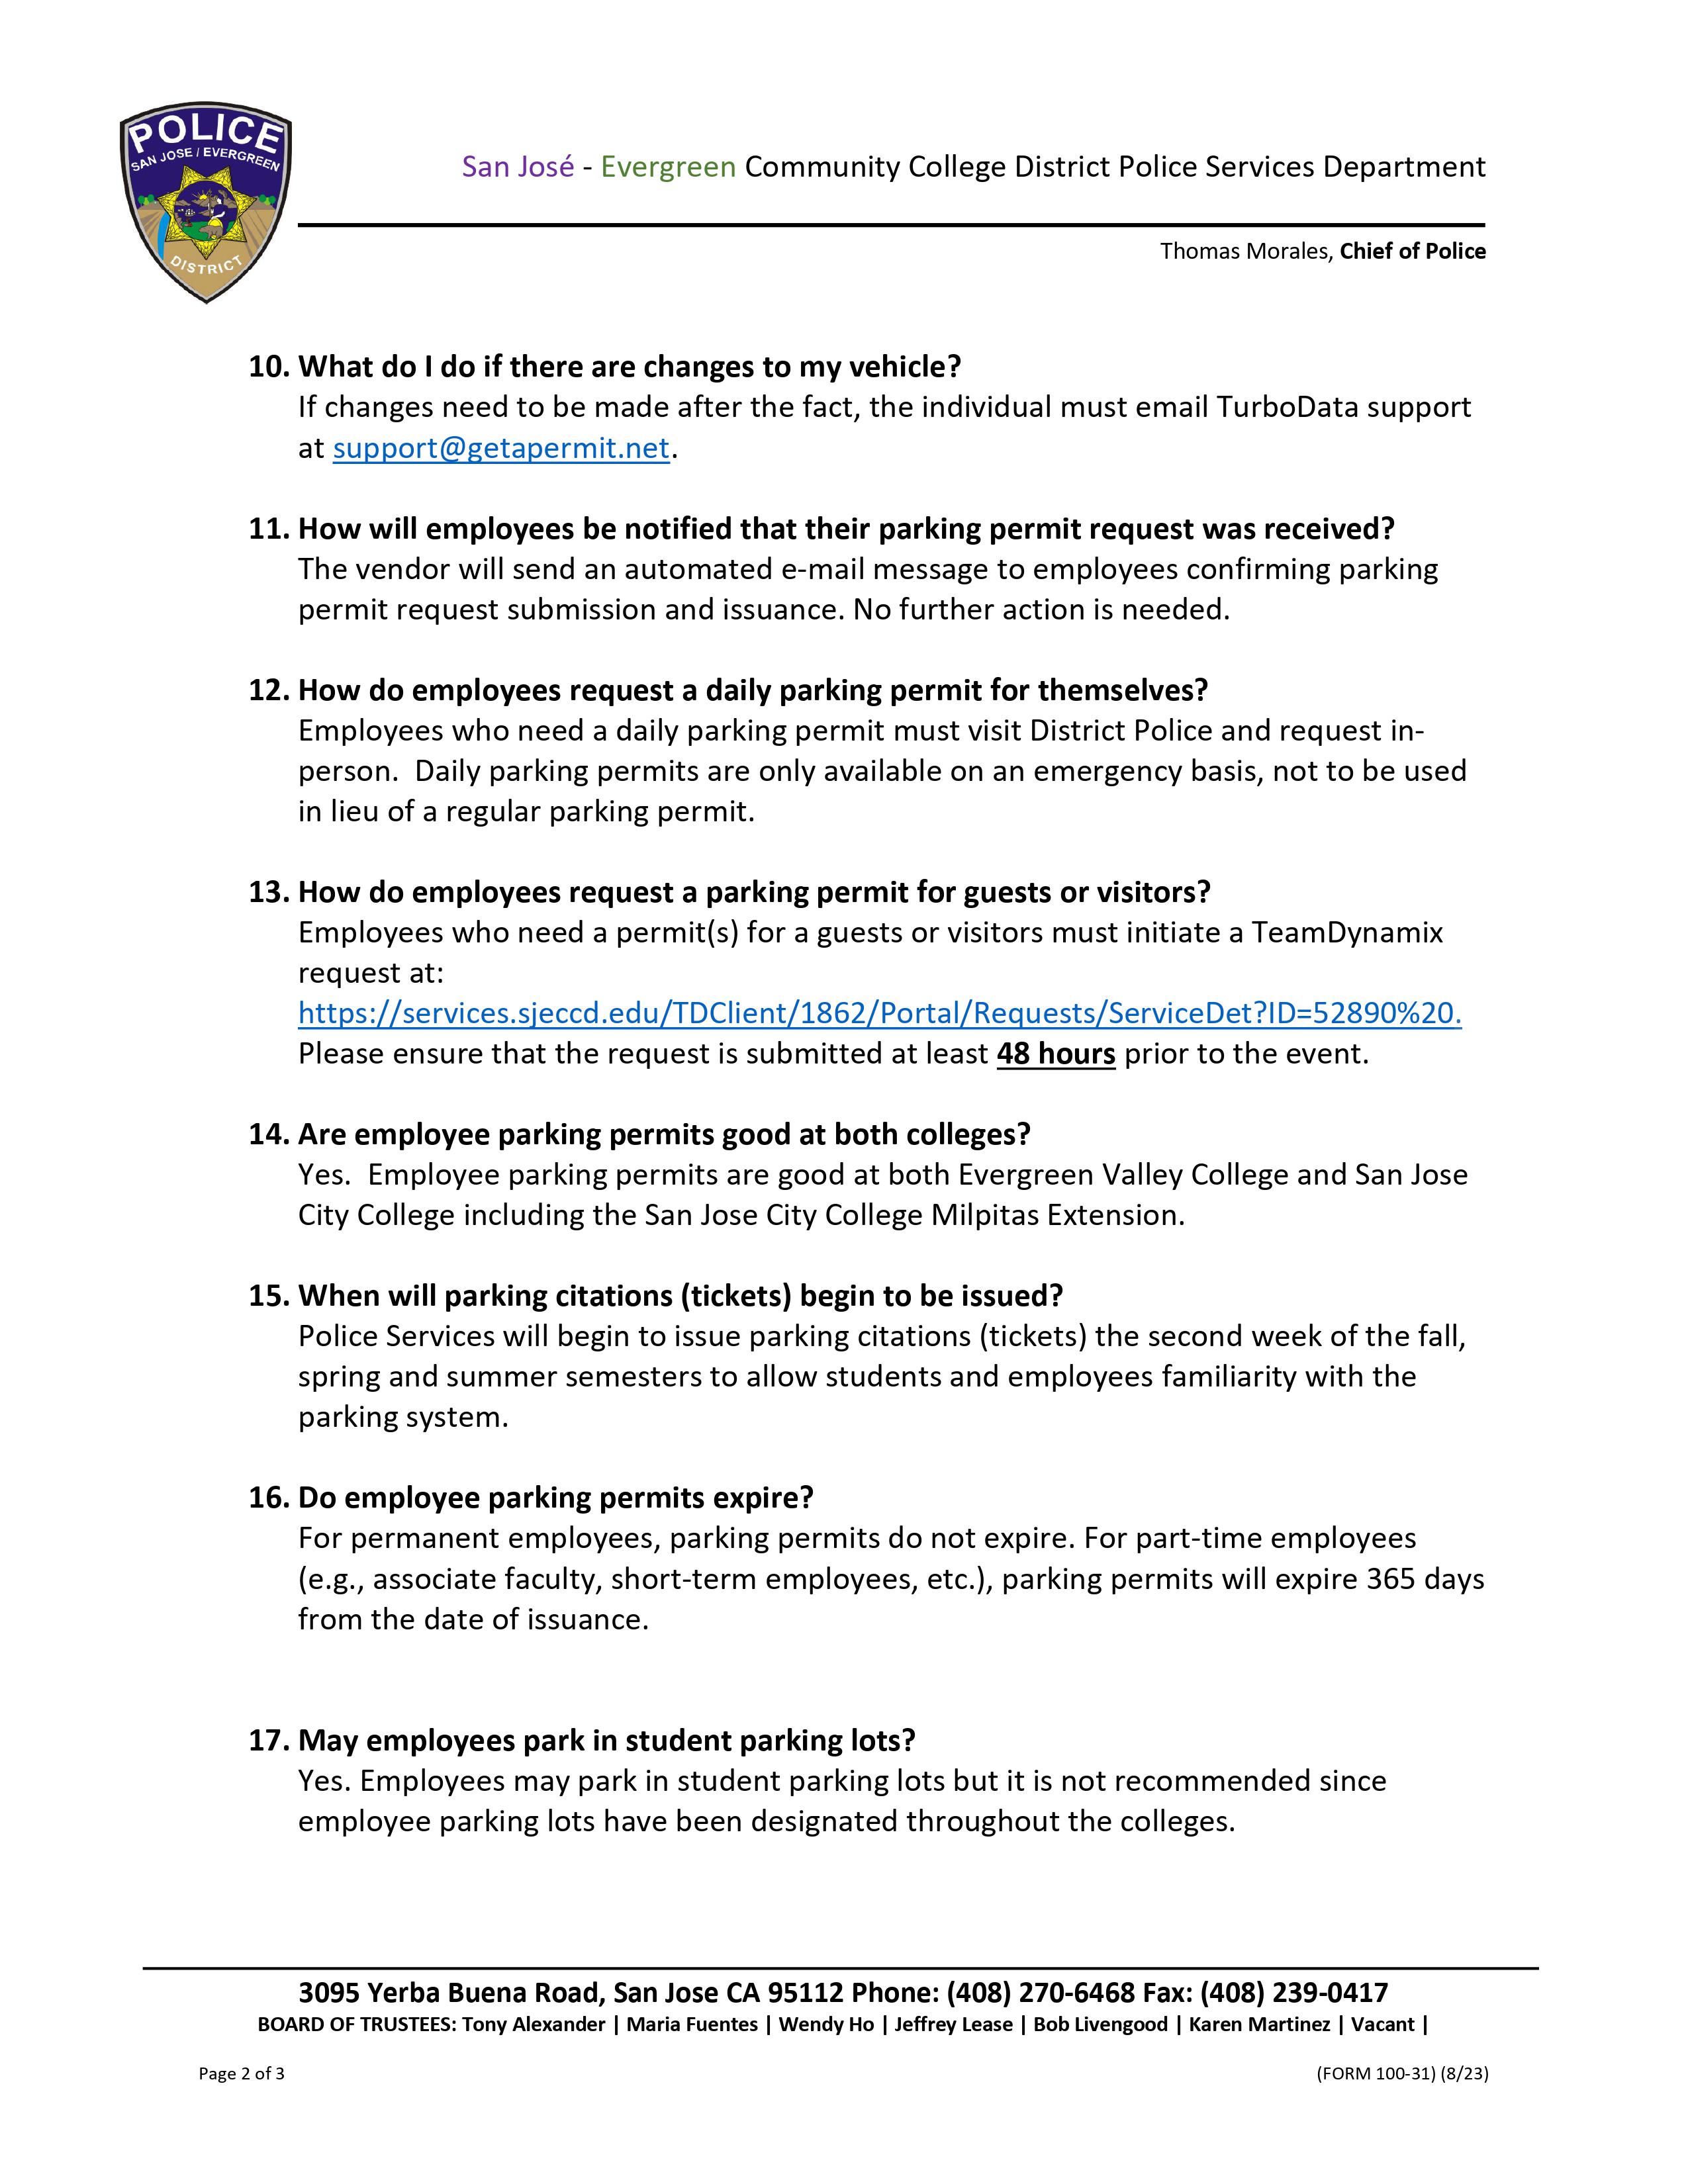 Employee Permit FAQ Screenshot of PDF page 2 of 3